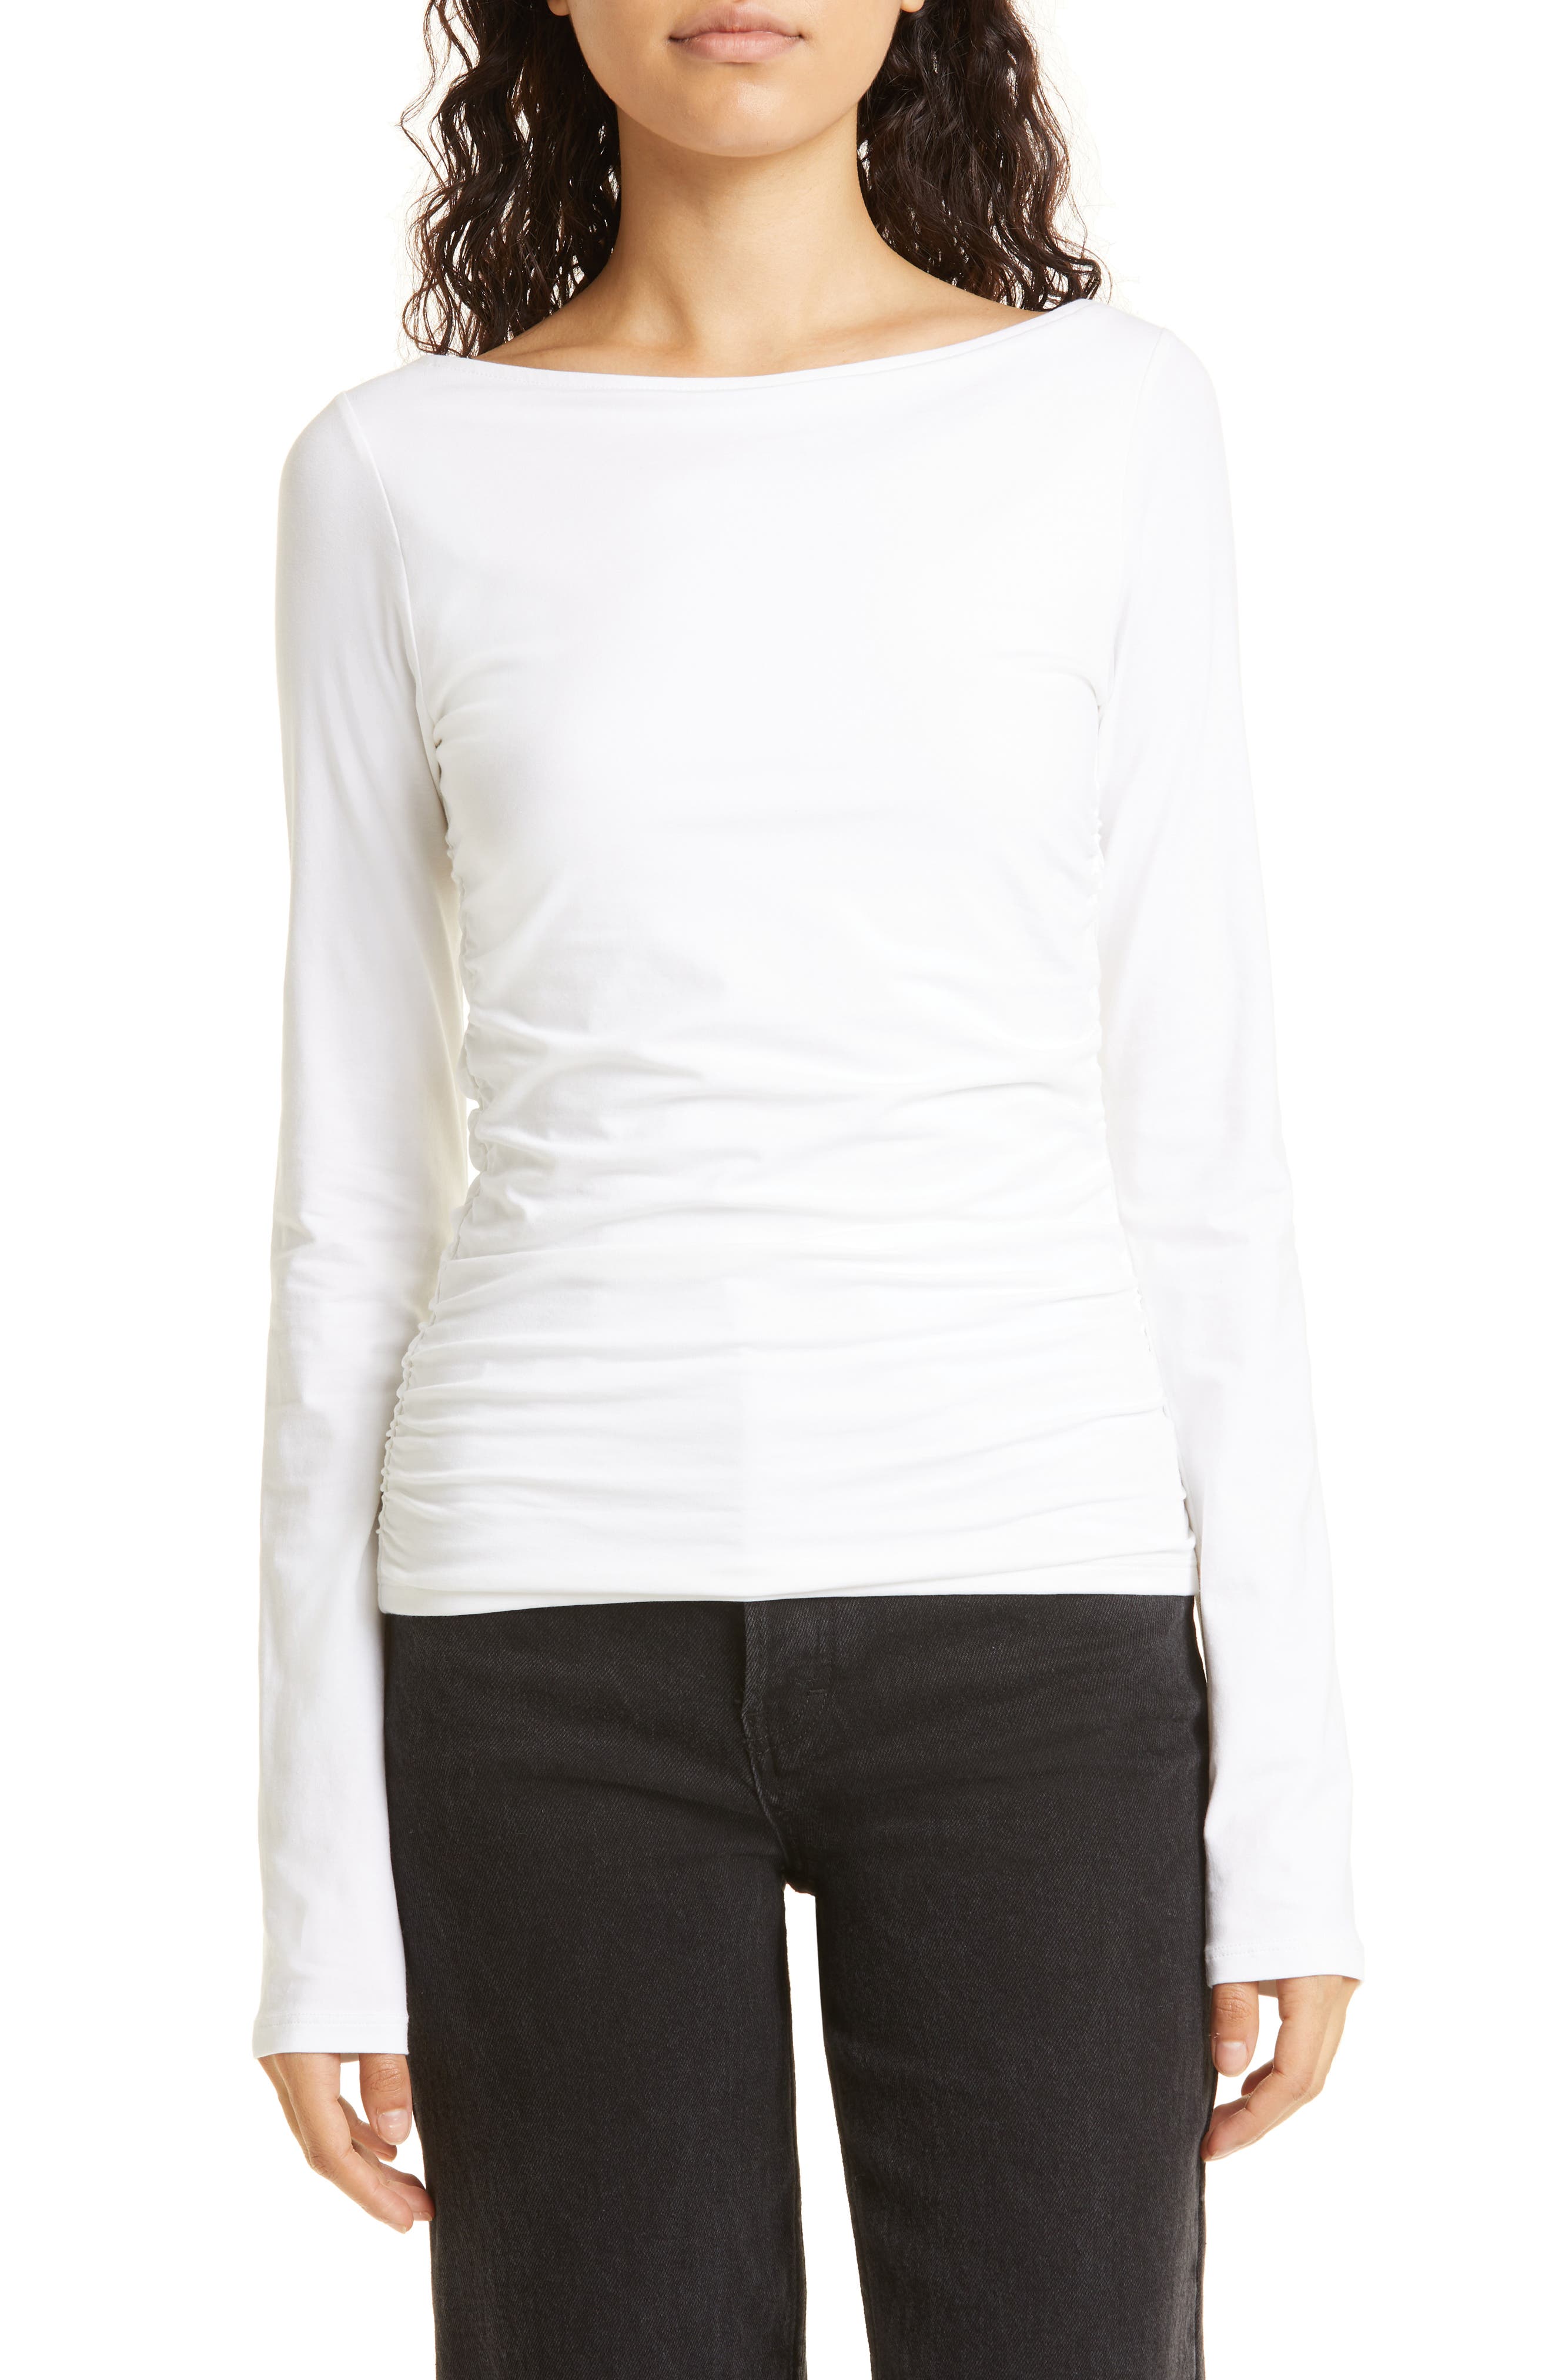 ATM Cotton Camo-print Slub Tee in Grey Womens Clothing Tops Long-sleeved tops 